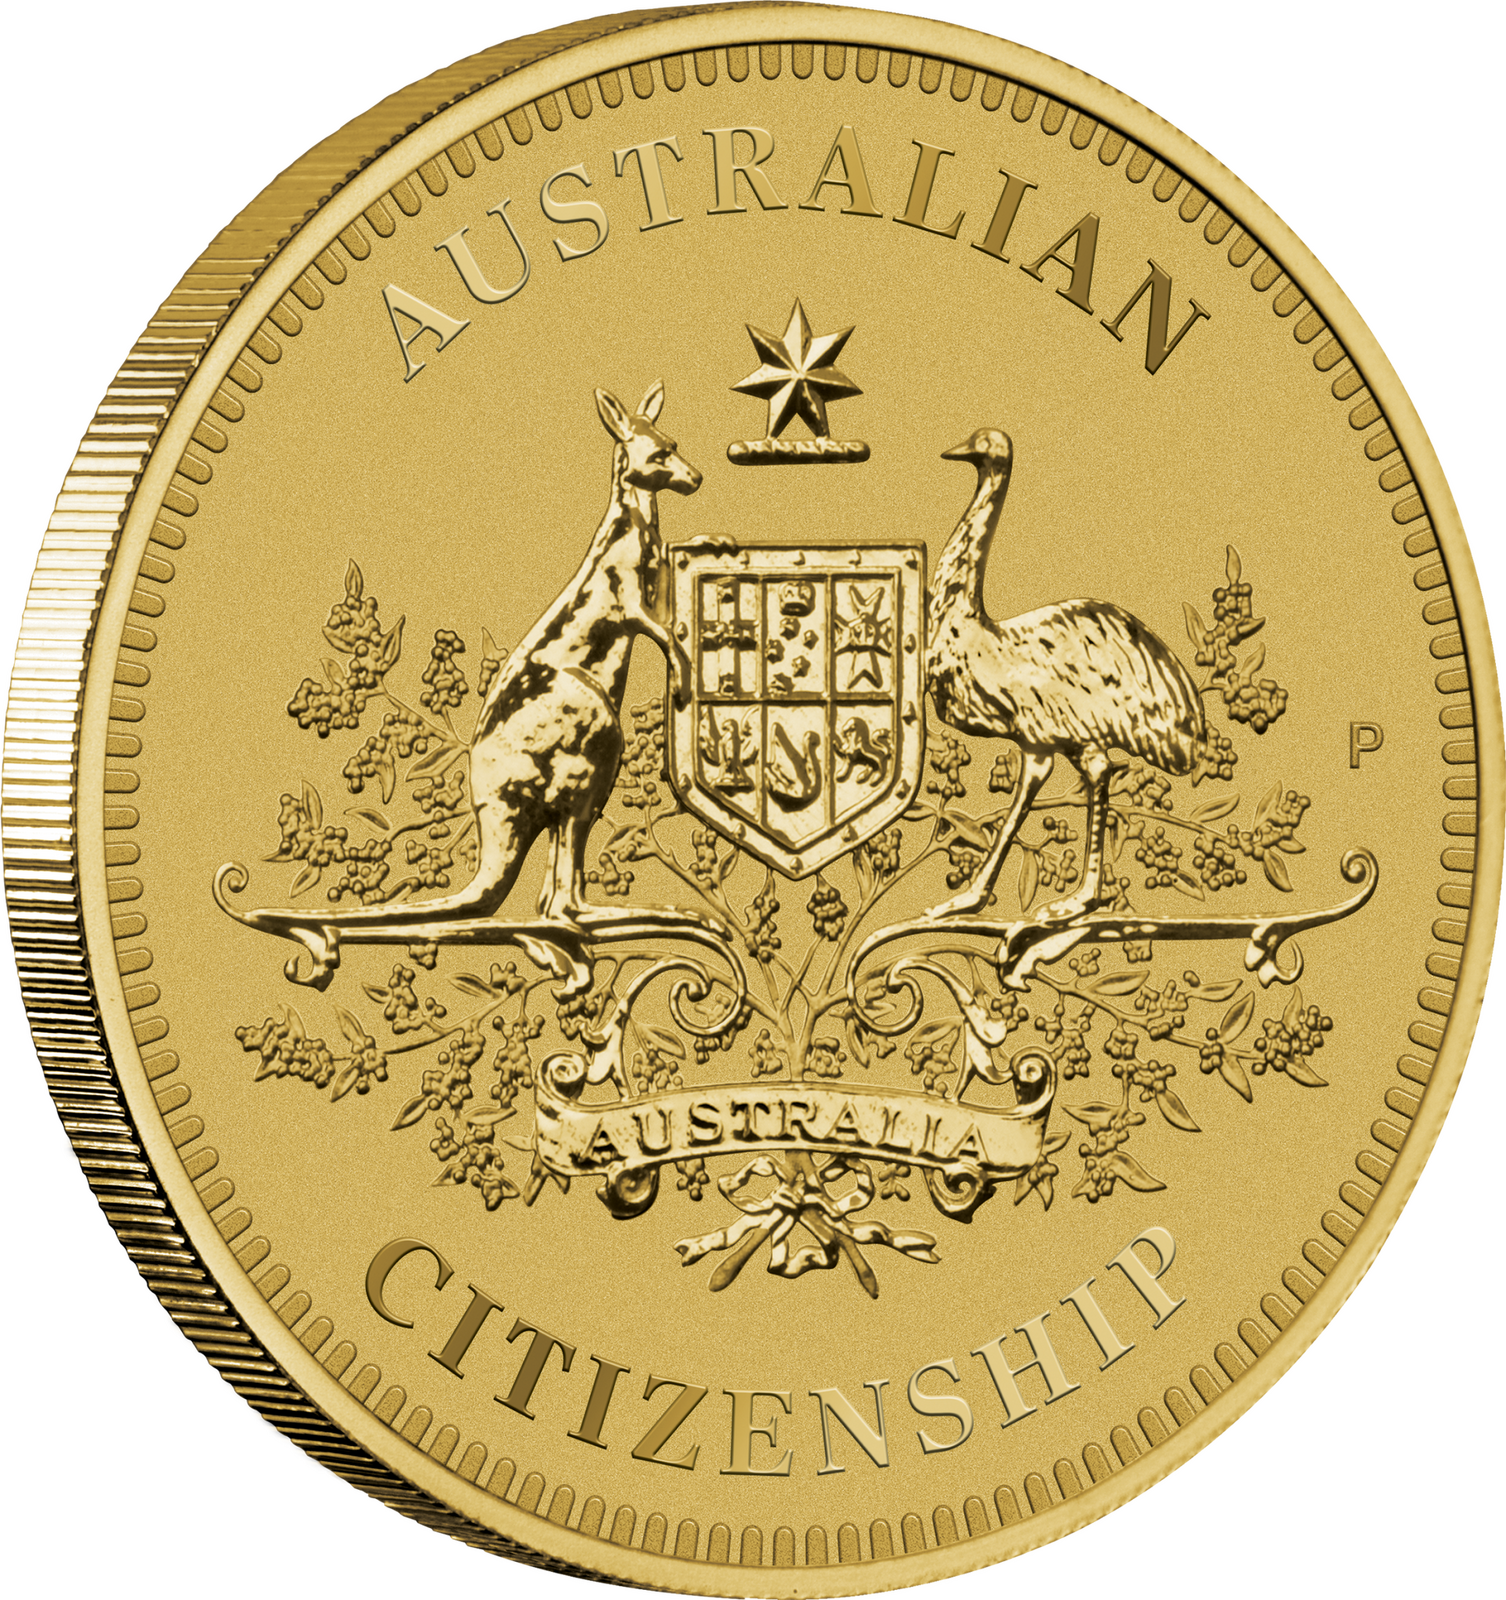 2024 $1 Australian Citizenship Brilliant Uncirculated Coin